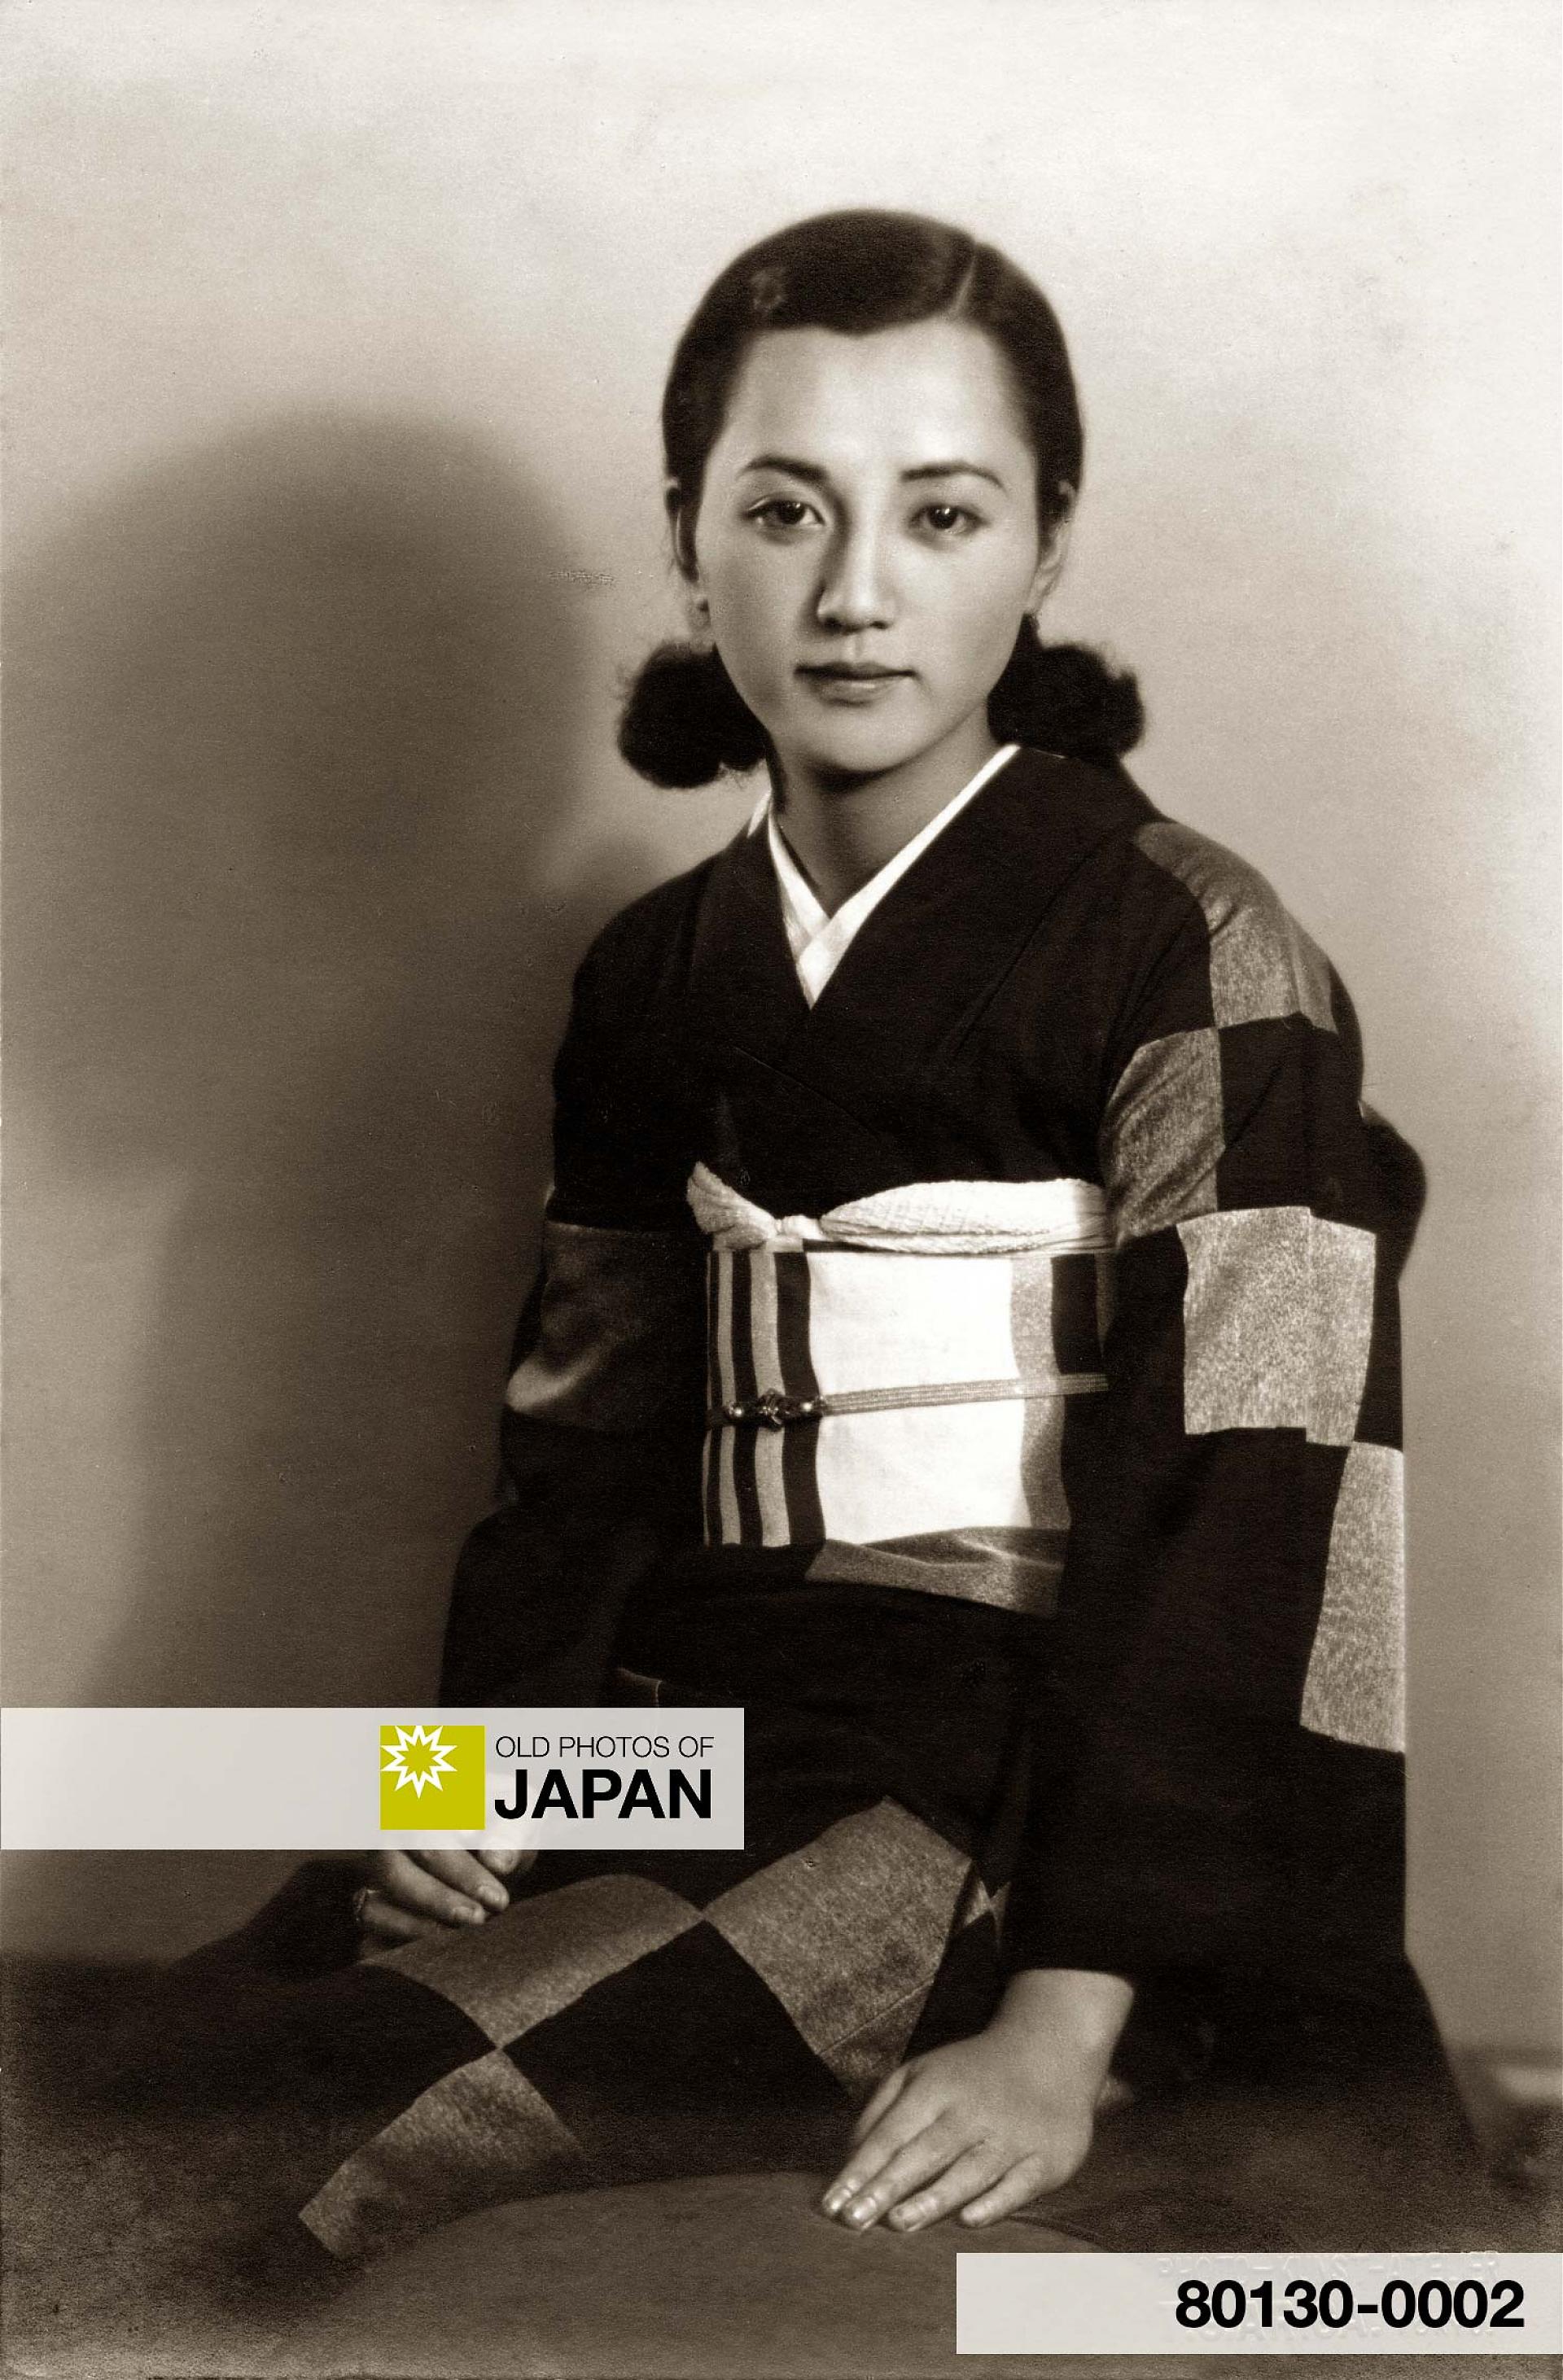 80130-0002 - Japanese woman in kimono, 1930s